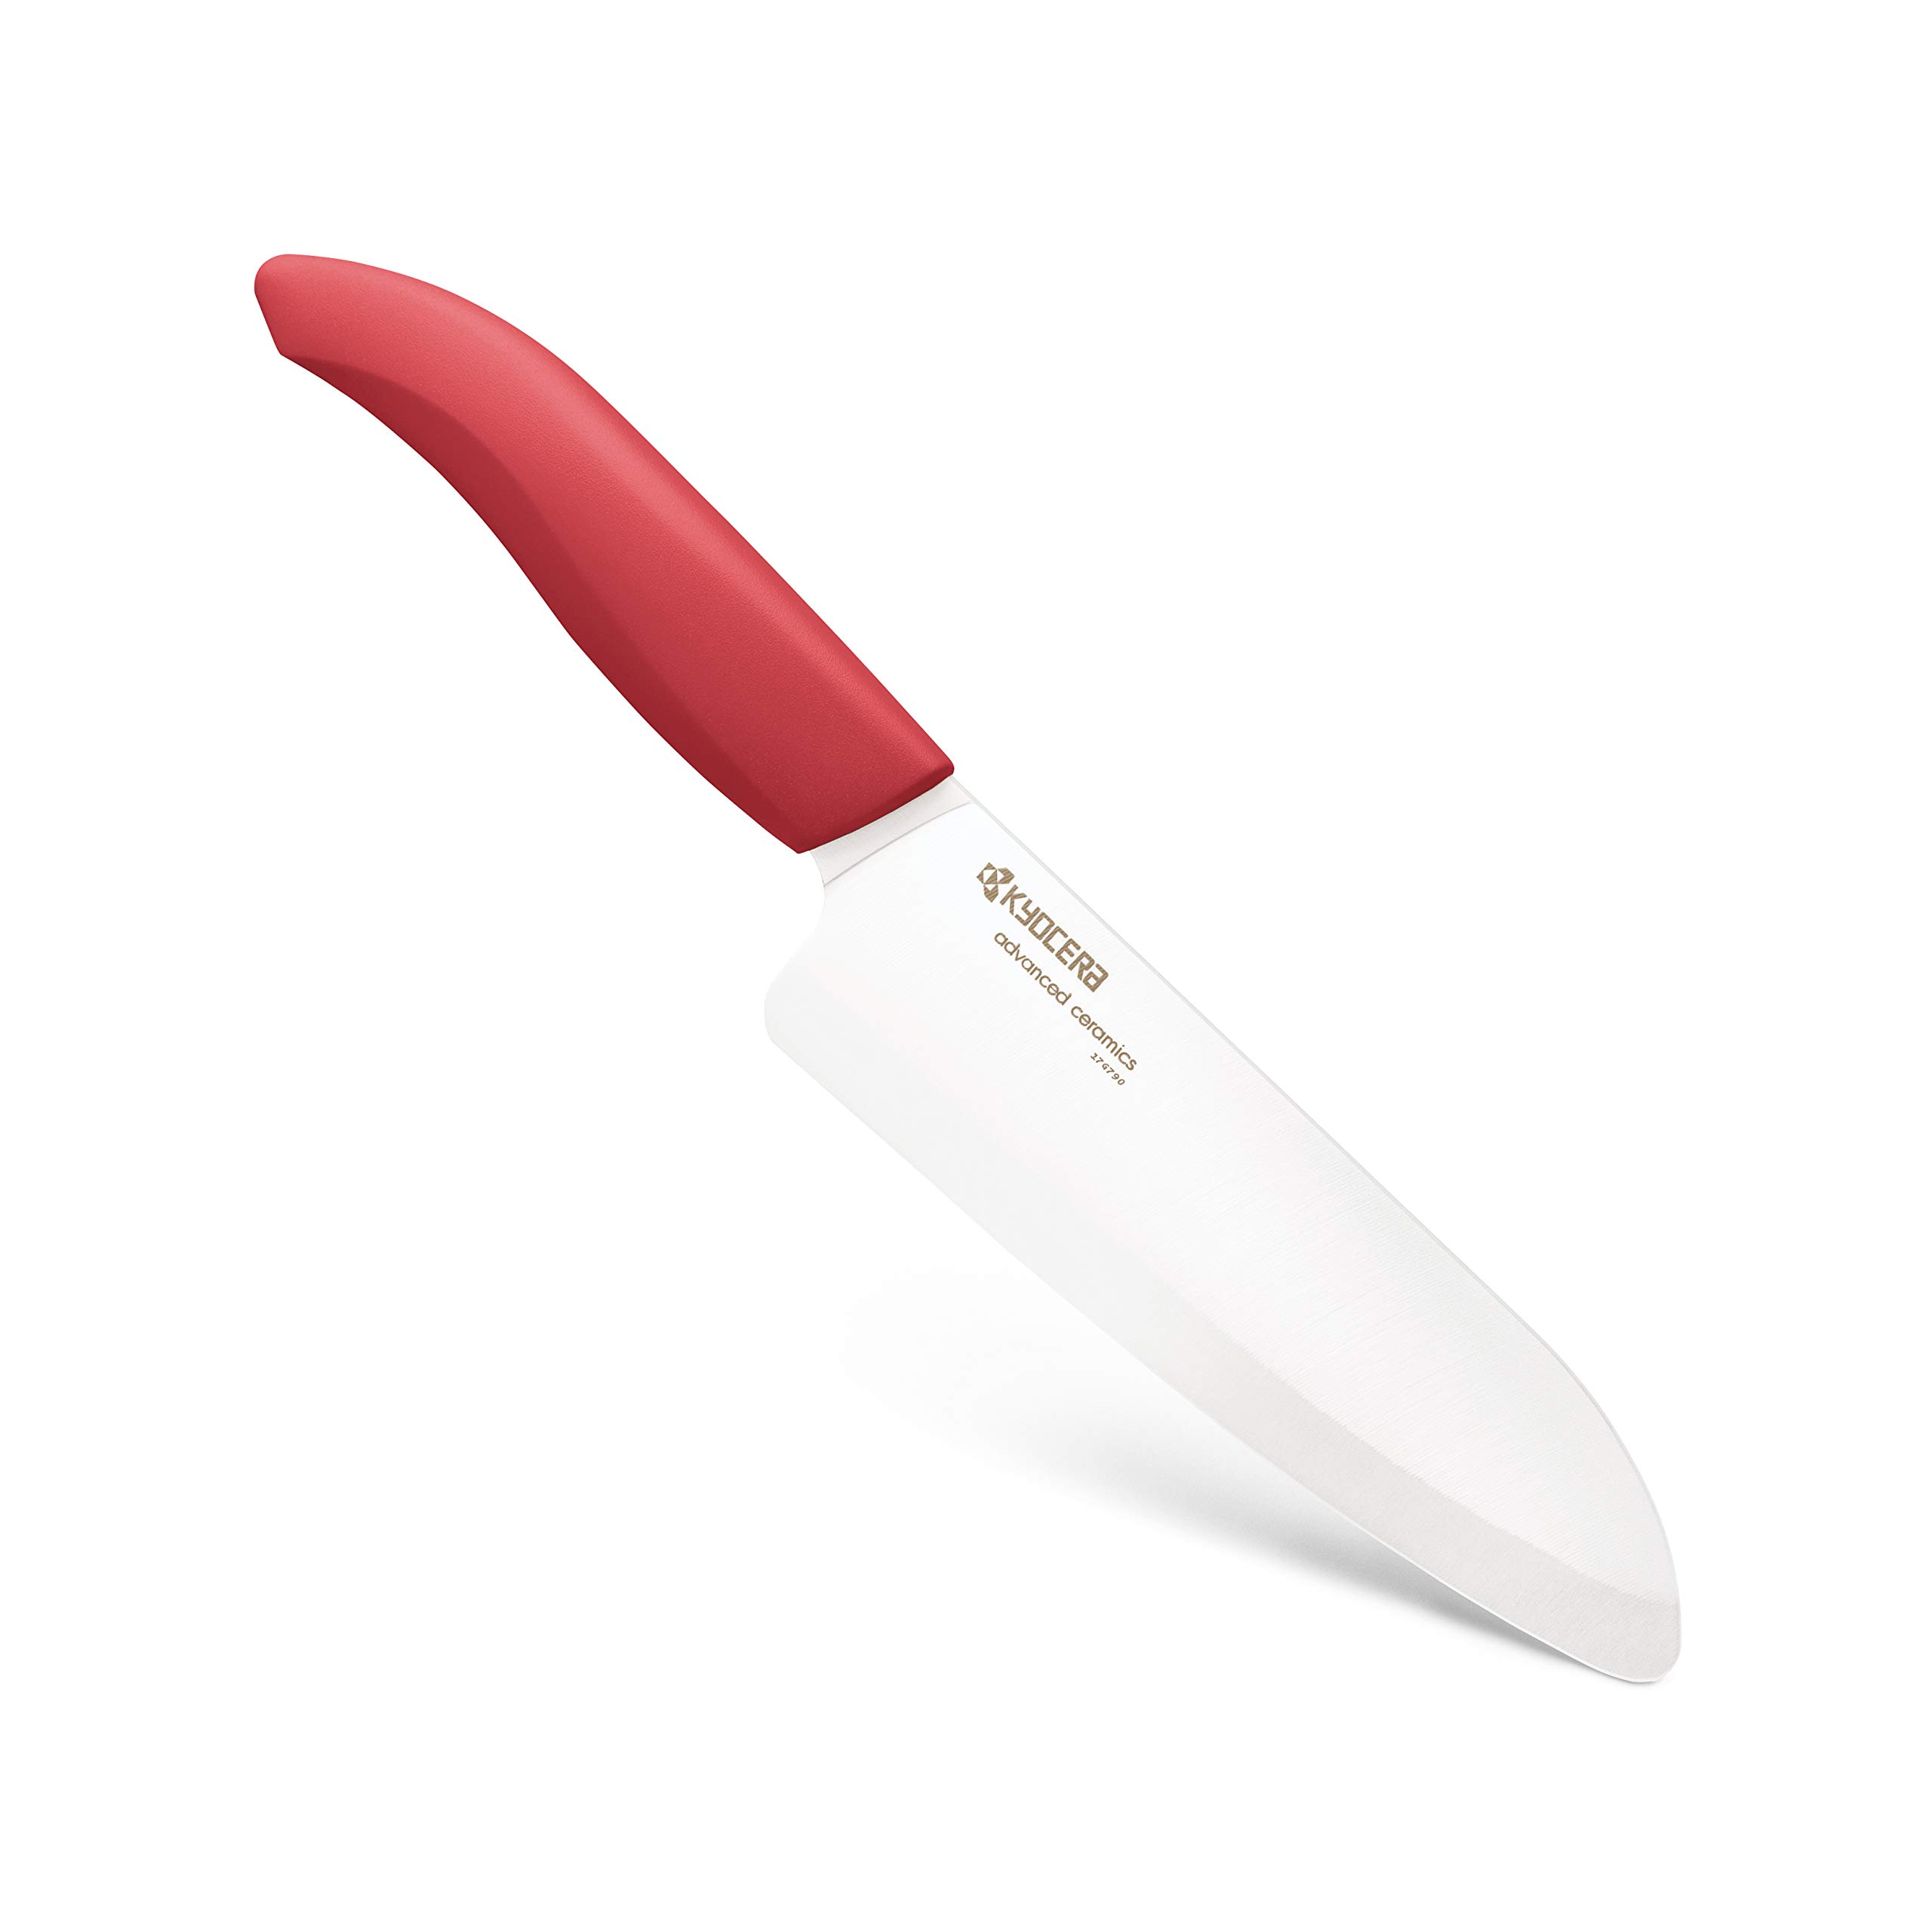 Kyocera Advanced Ceramic Revolution 4-Piece Knife Set: Includes 6-inch Chef's Santoku, 5.5-inch Santoku, 4.5-inch Utility and 3-inch Paring-Red Handles w/ White Blades